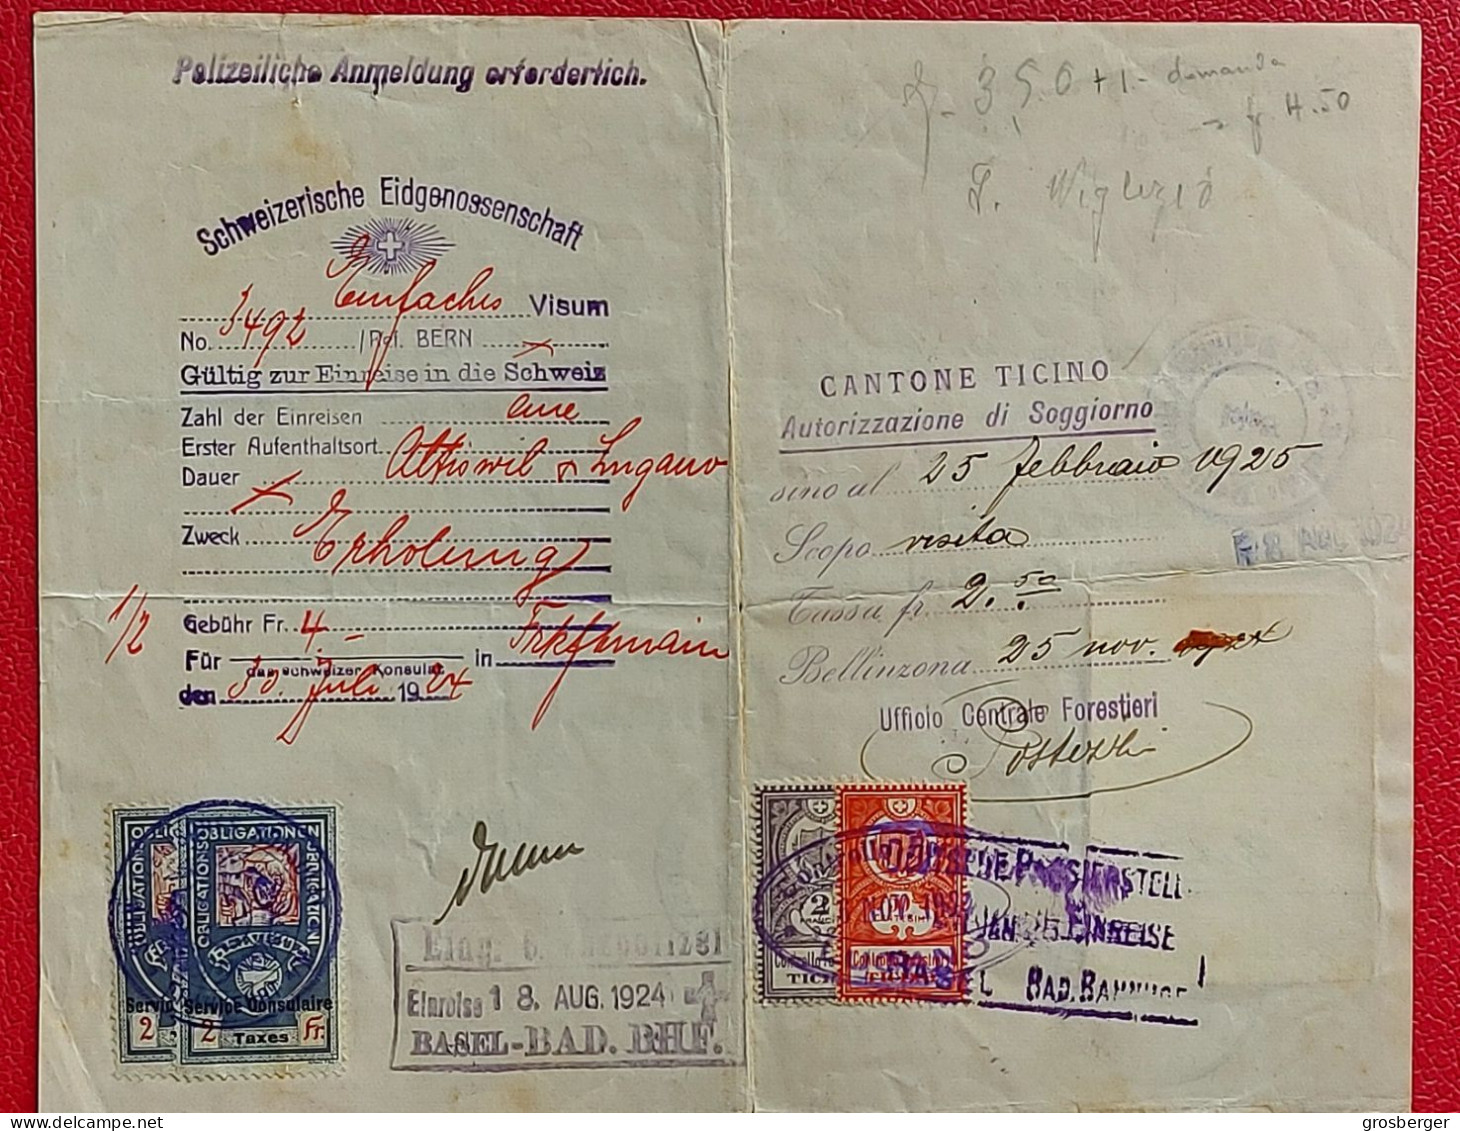 Juive Juif Jewish Kinder Ausweis Travel ID Passport For The Girl Visa Italy And Schweiz V.photo 1924 Cassel Judaika Rare - Historische Documenten